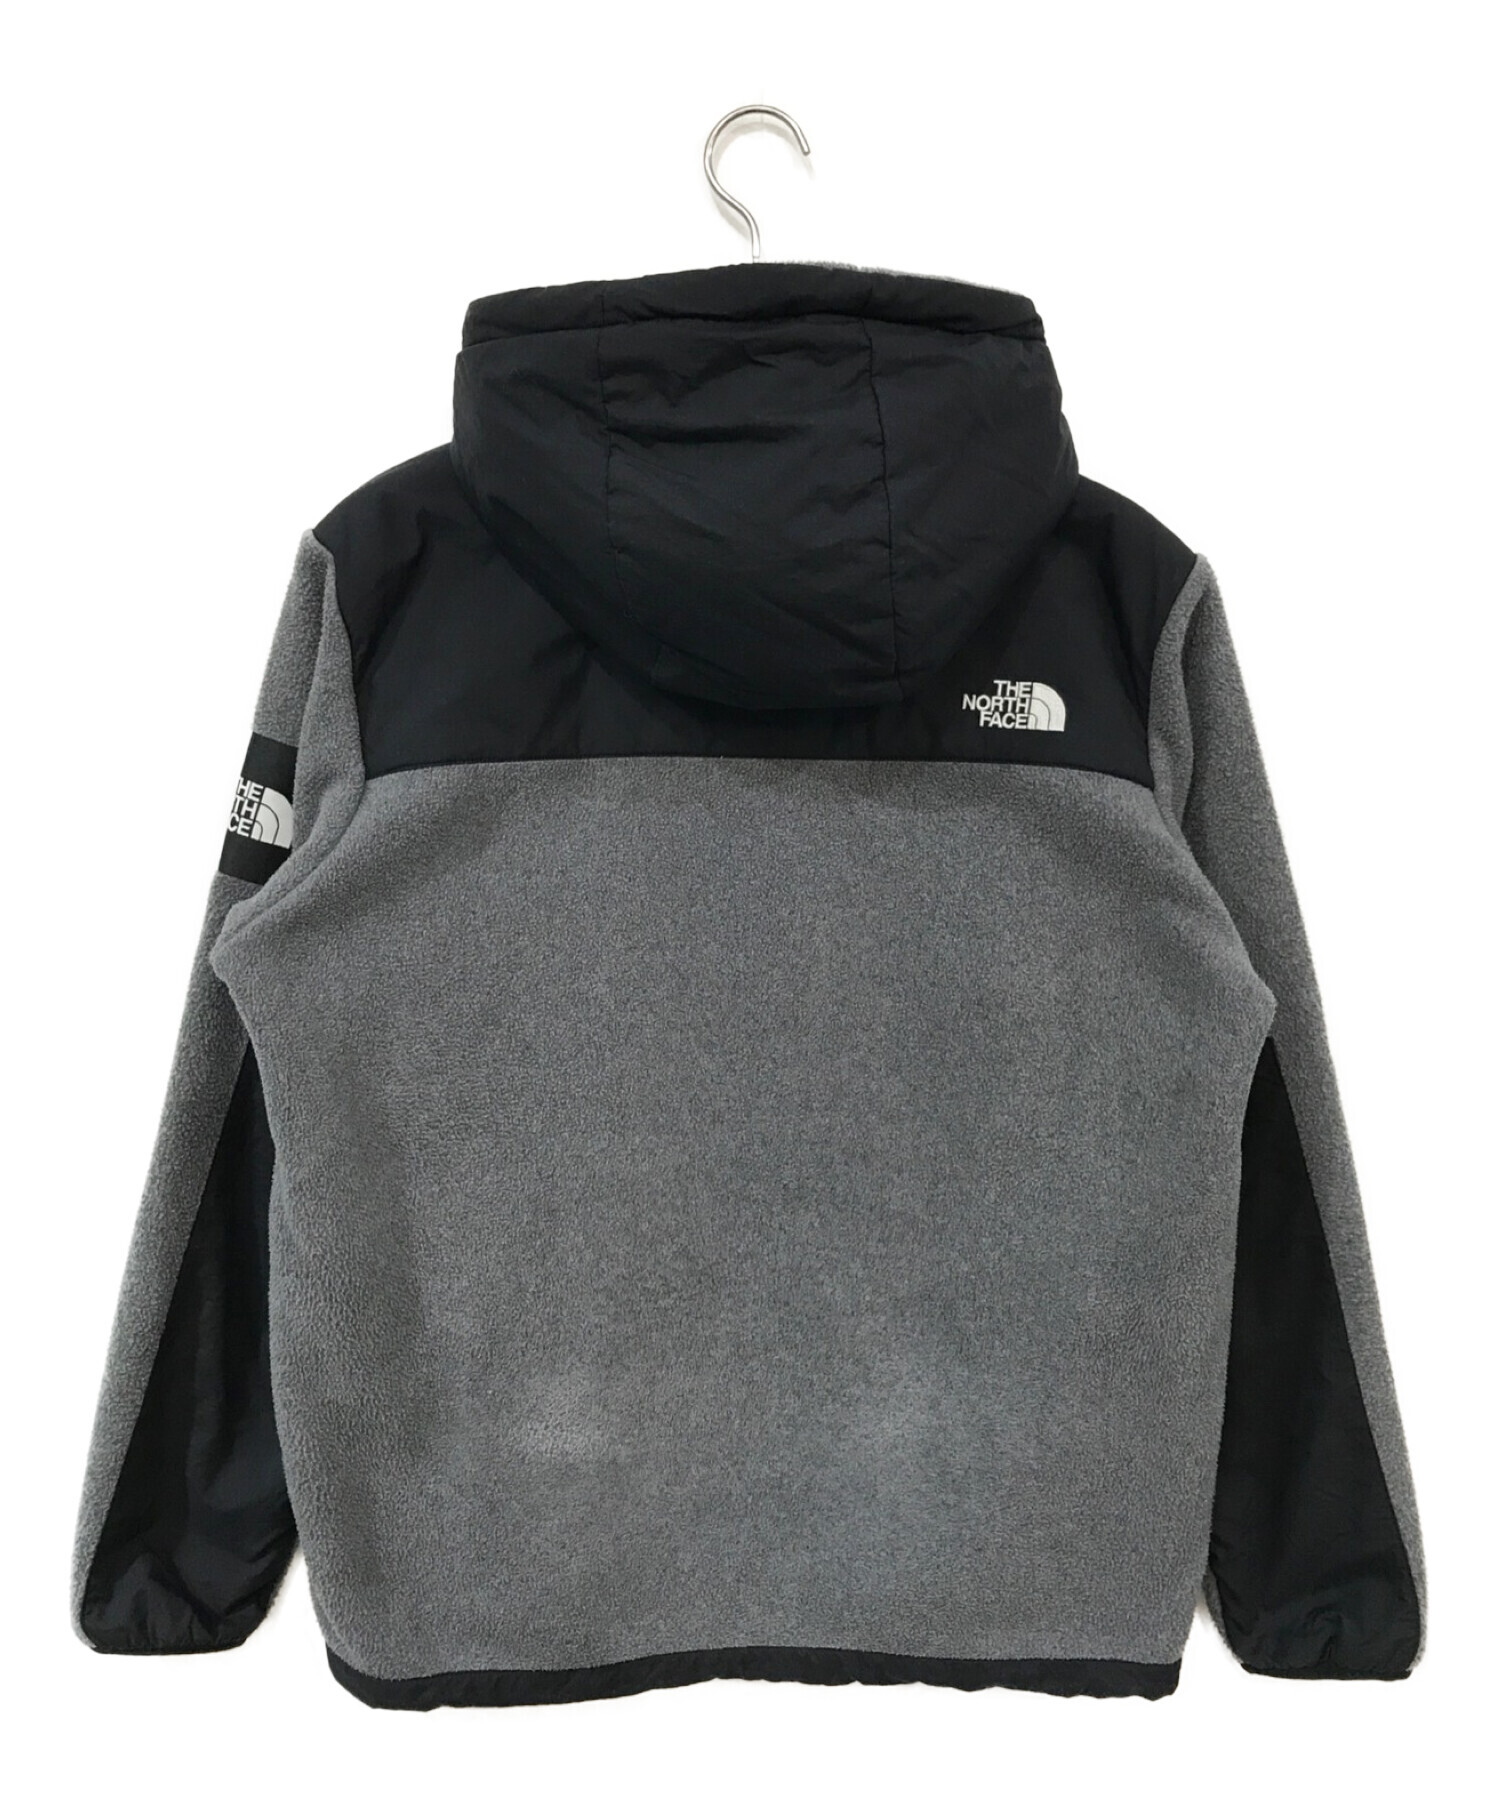 The North Face Denali Hoodie Soft Fleece Full Zip Jacket-Women Size L  Graver$190